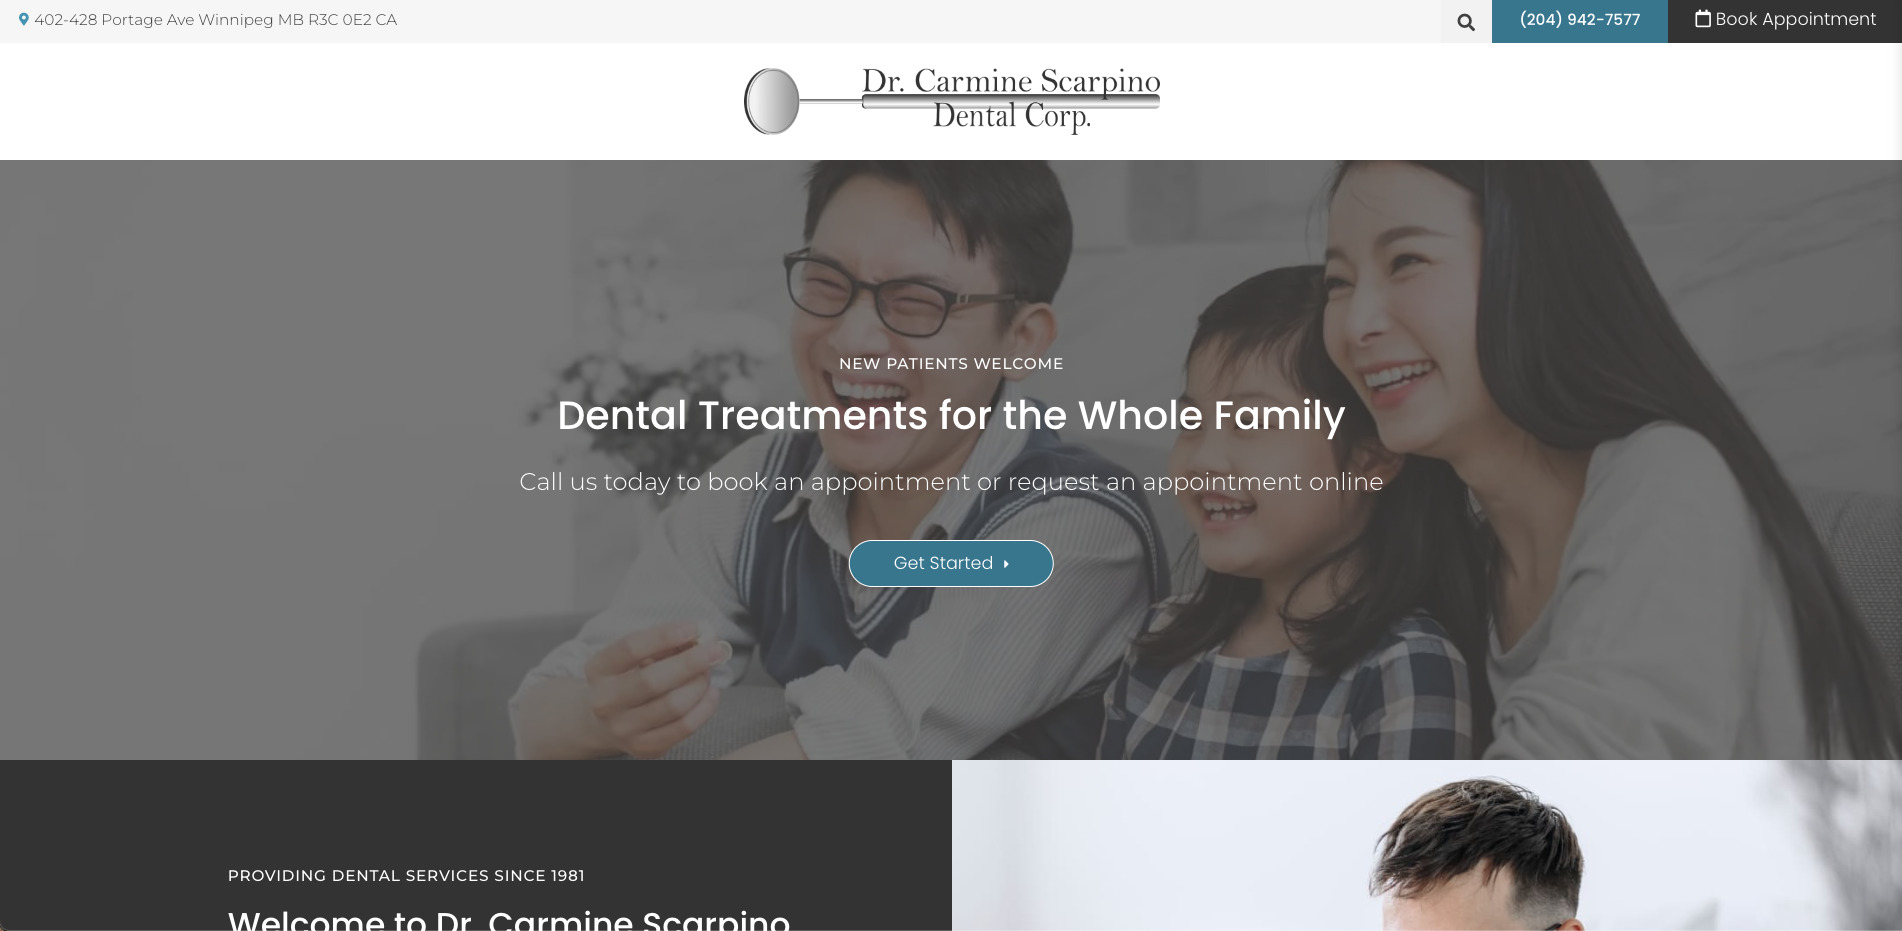 homepage of dental services website